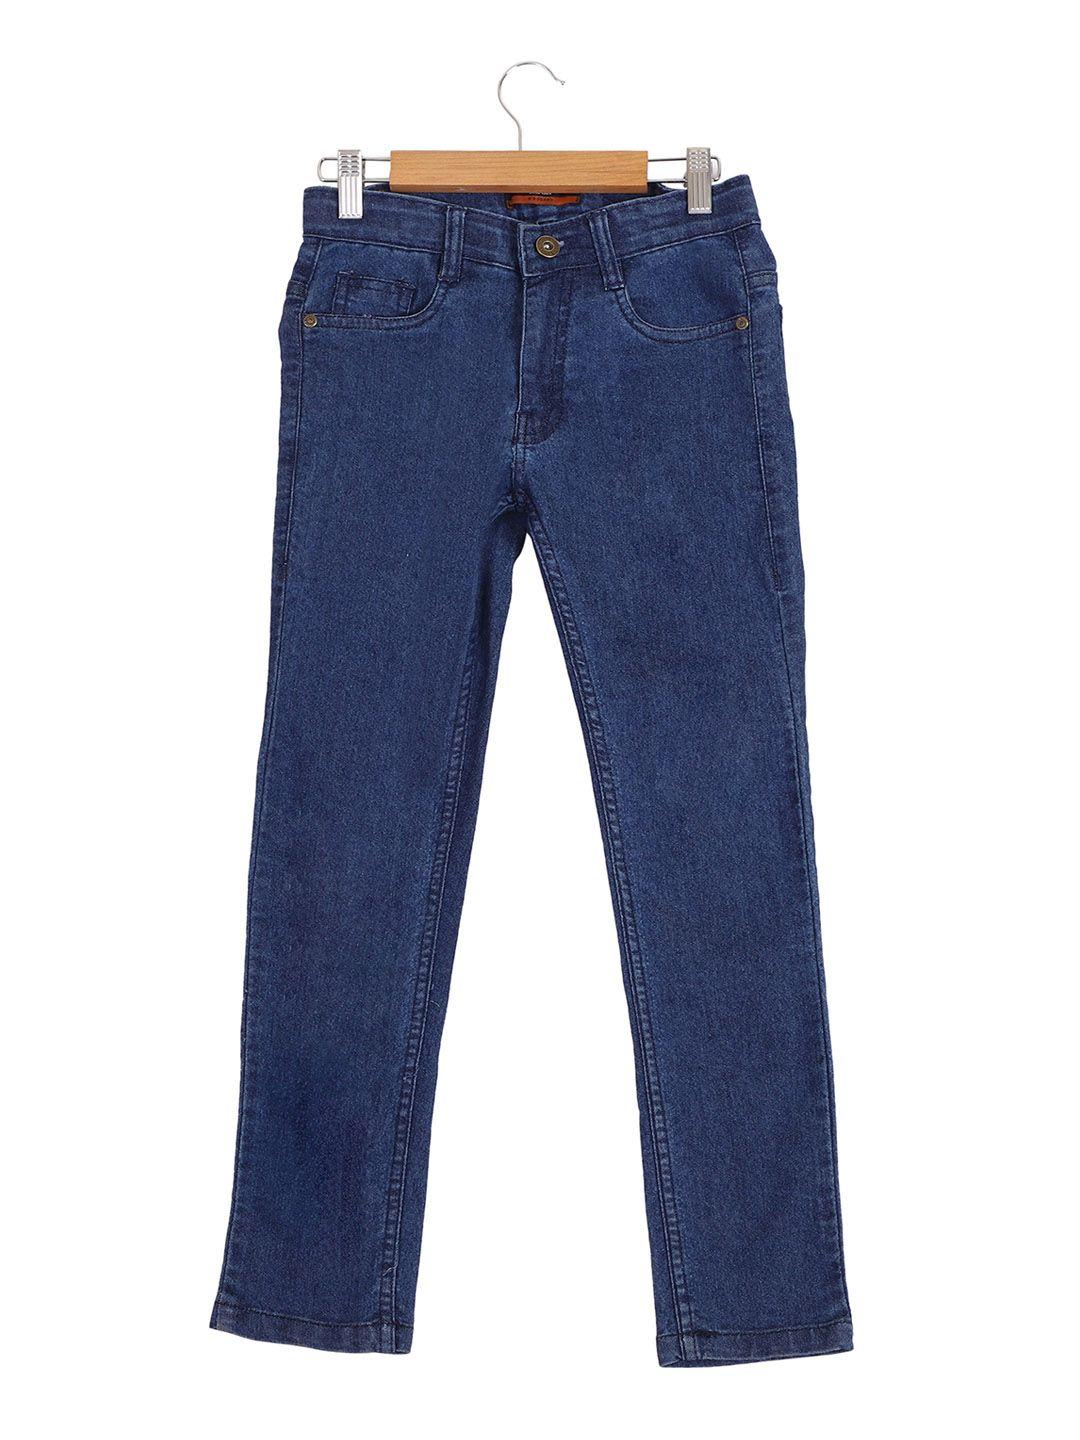 killer-boys-comfort-mid-rise-medium-shade-jeans